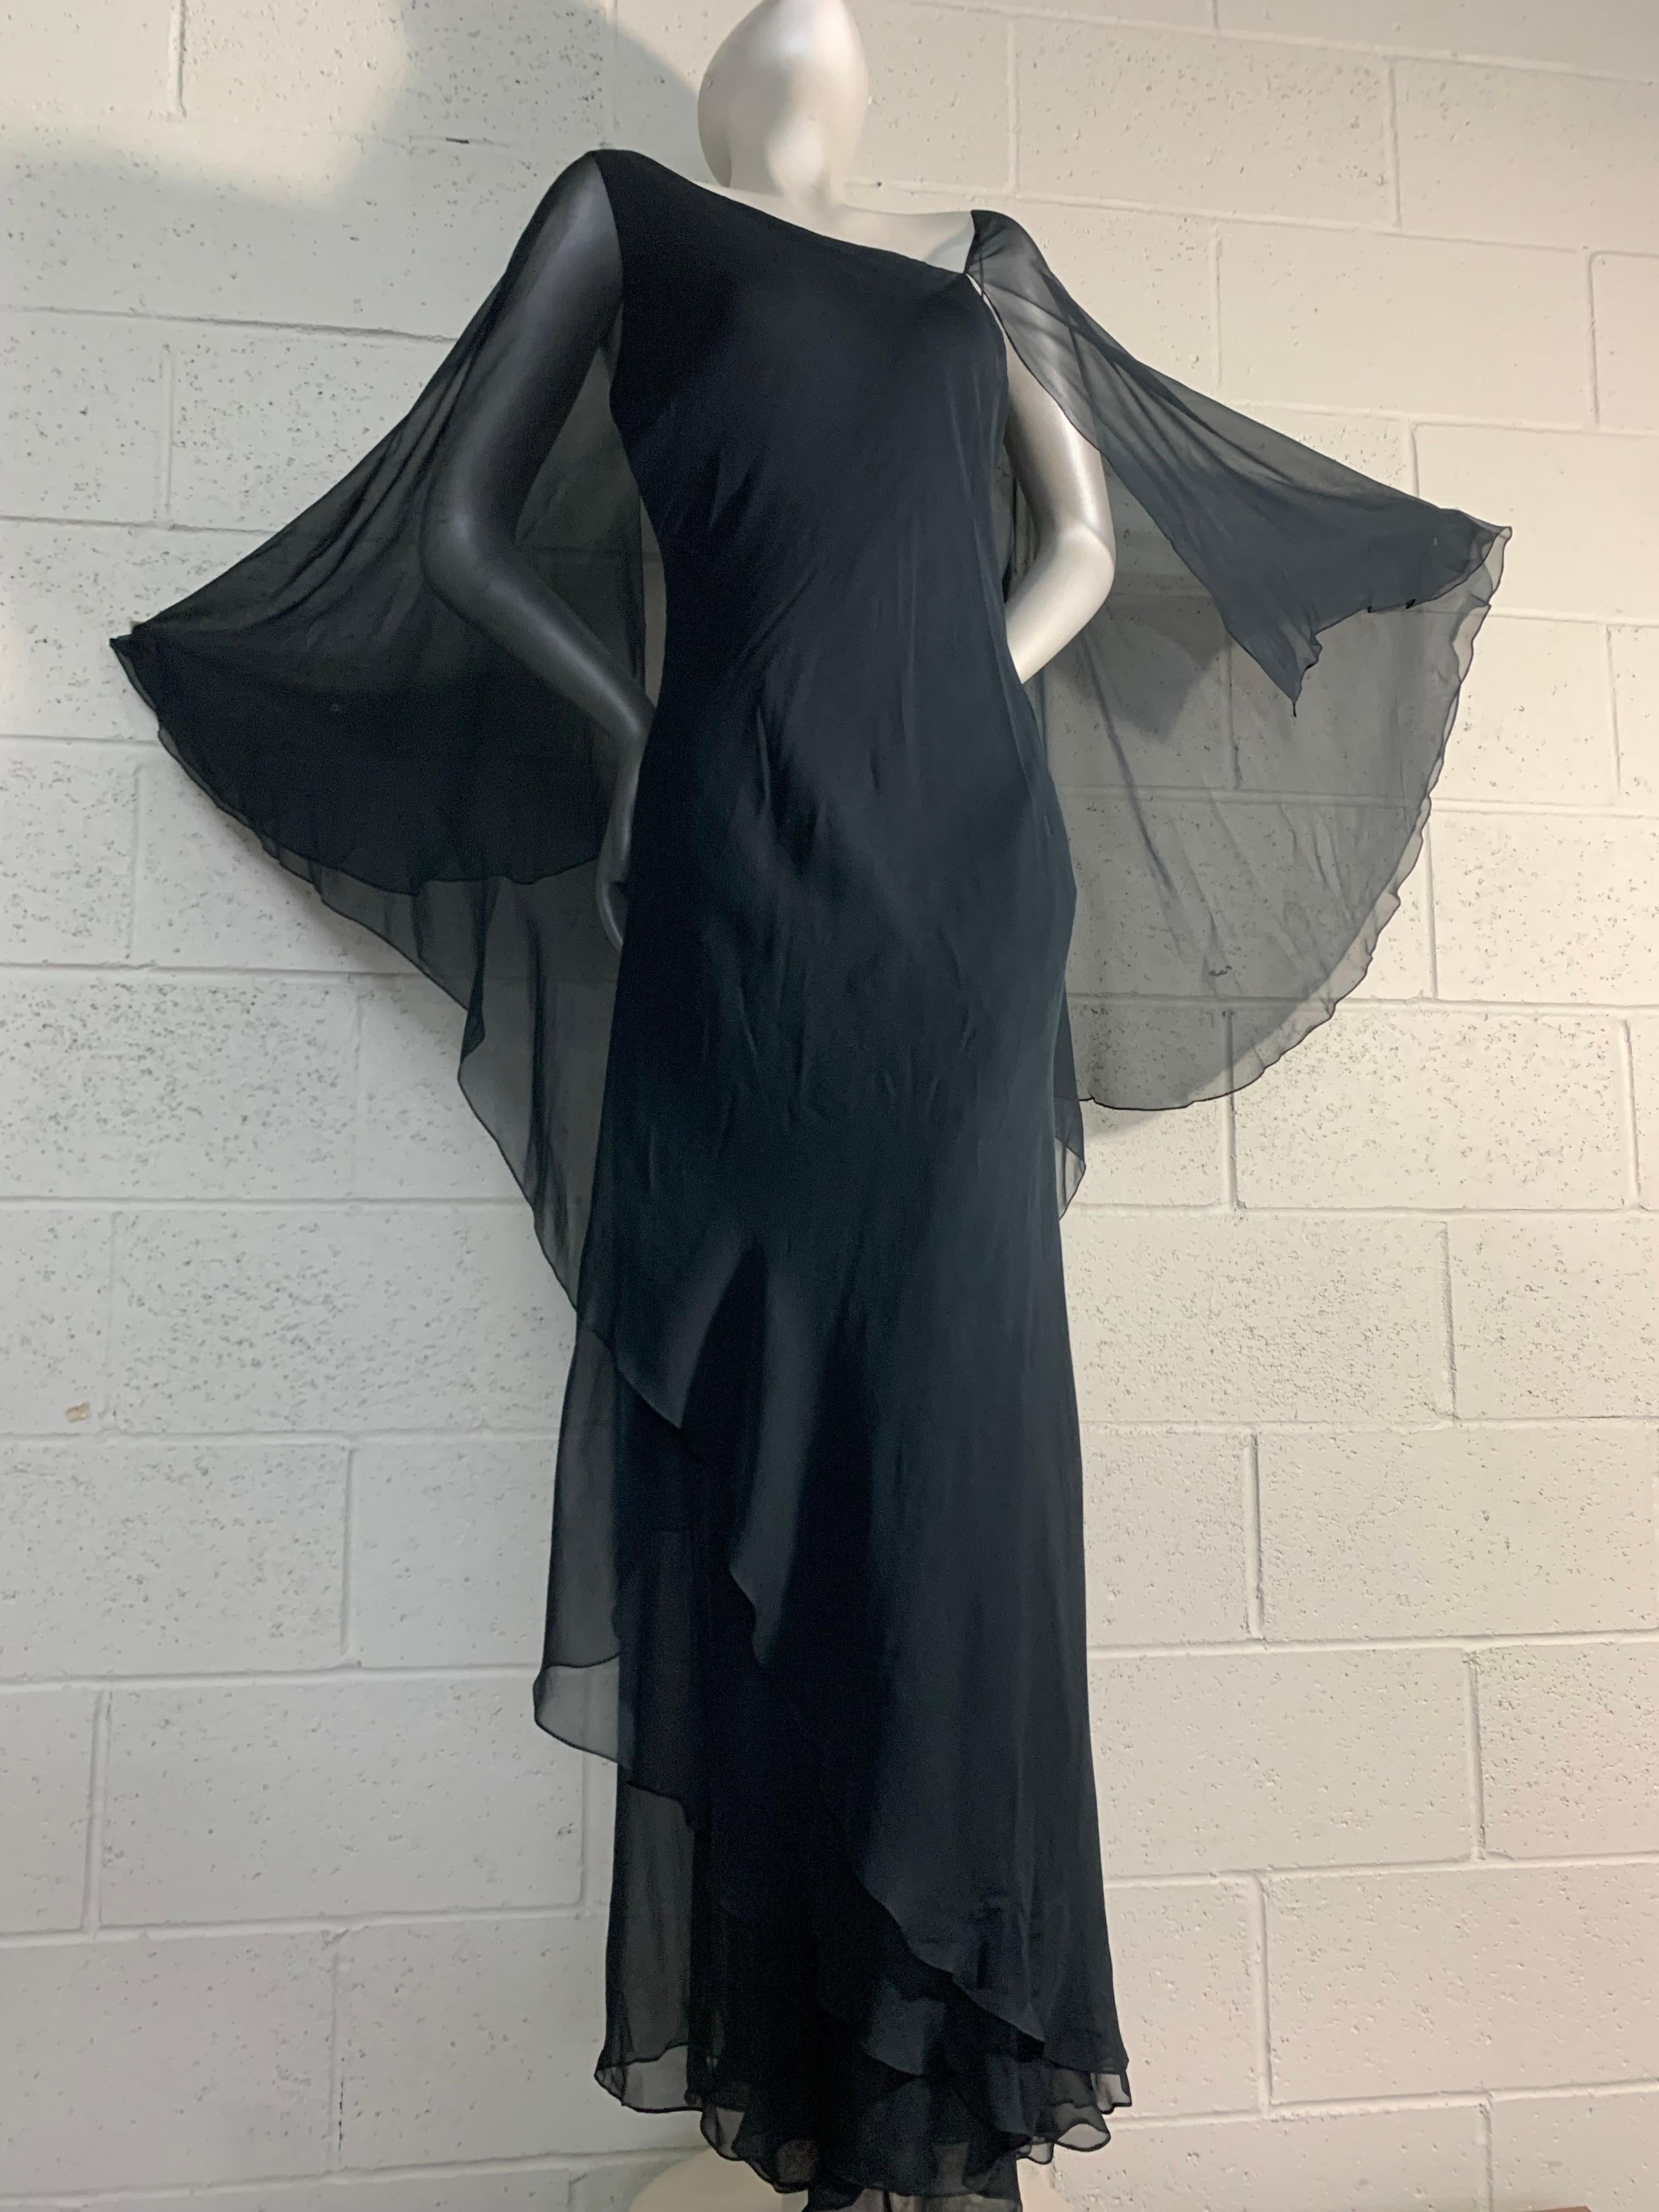 1970s Halston Black Silk Chiffon Tiered Bias One-Shoulder Gown with Attachd Sheer Cape: A stunning and sensual 7 layer swirl of bias cut silk chiffon with an attached sheer cape from a master of draping designs. US size 6-8. 